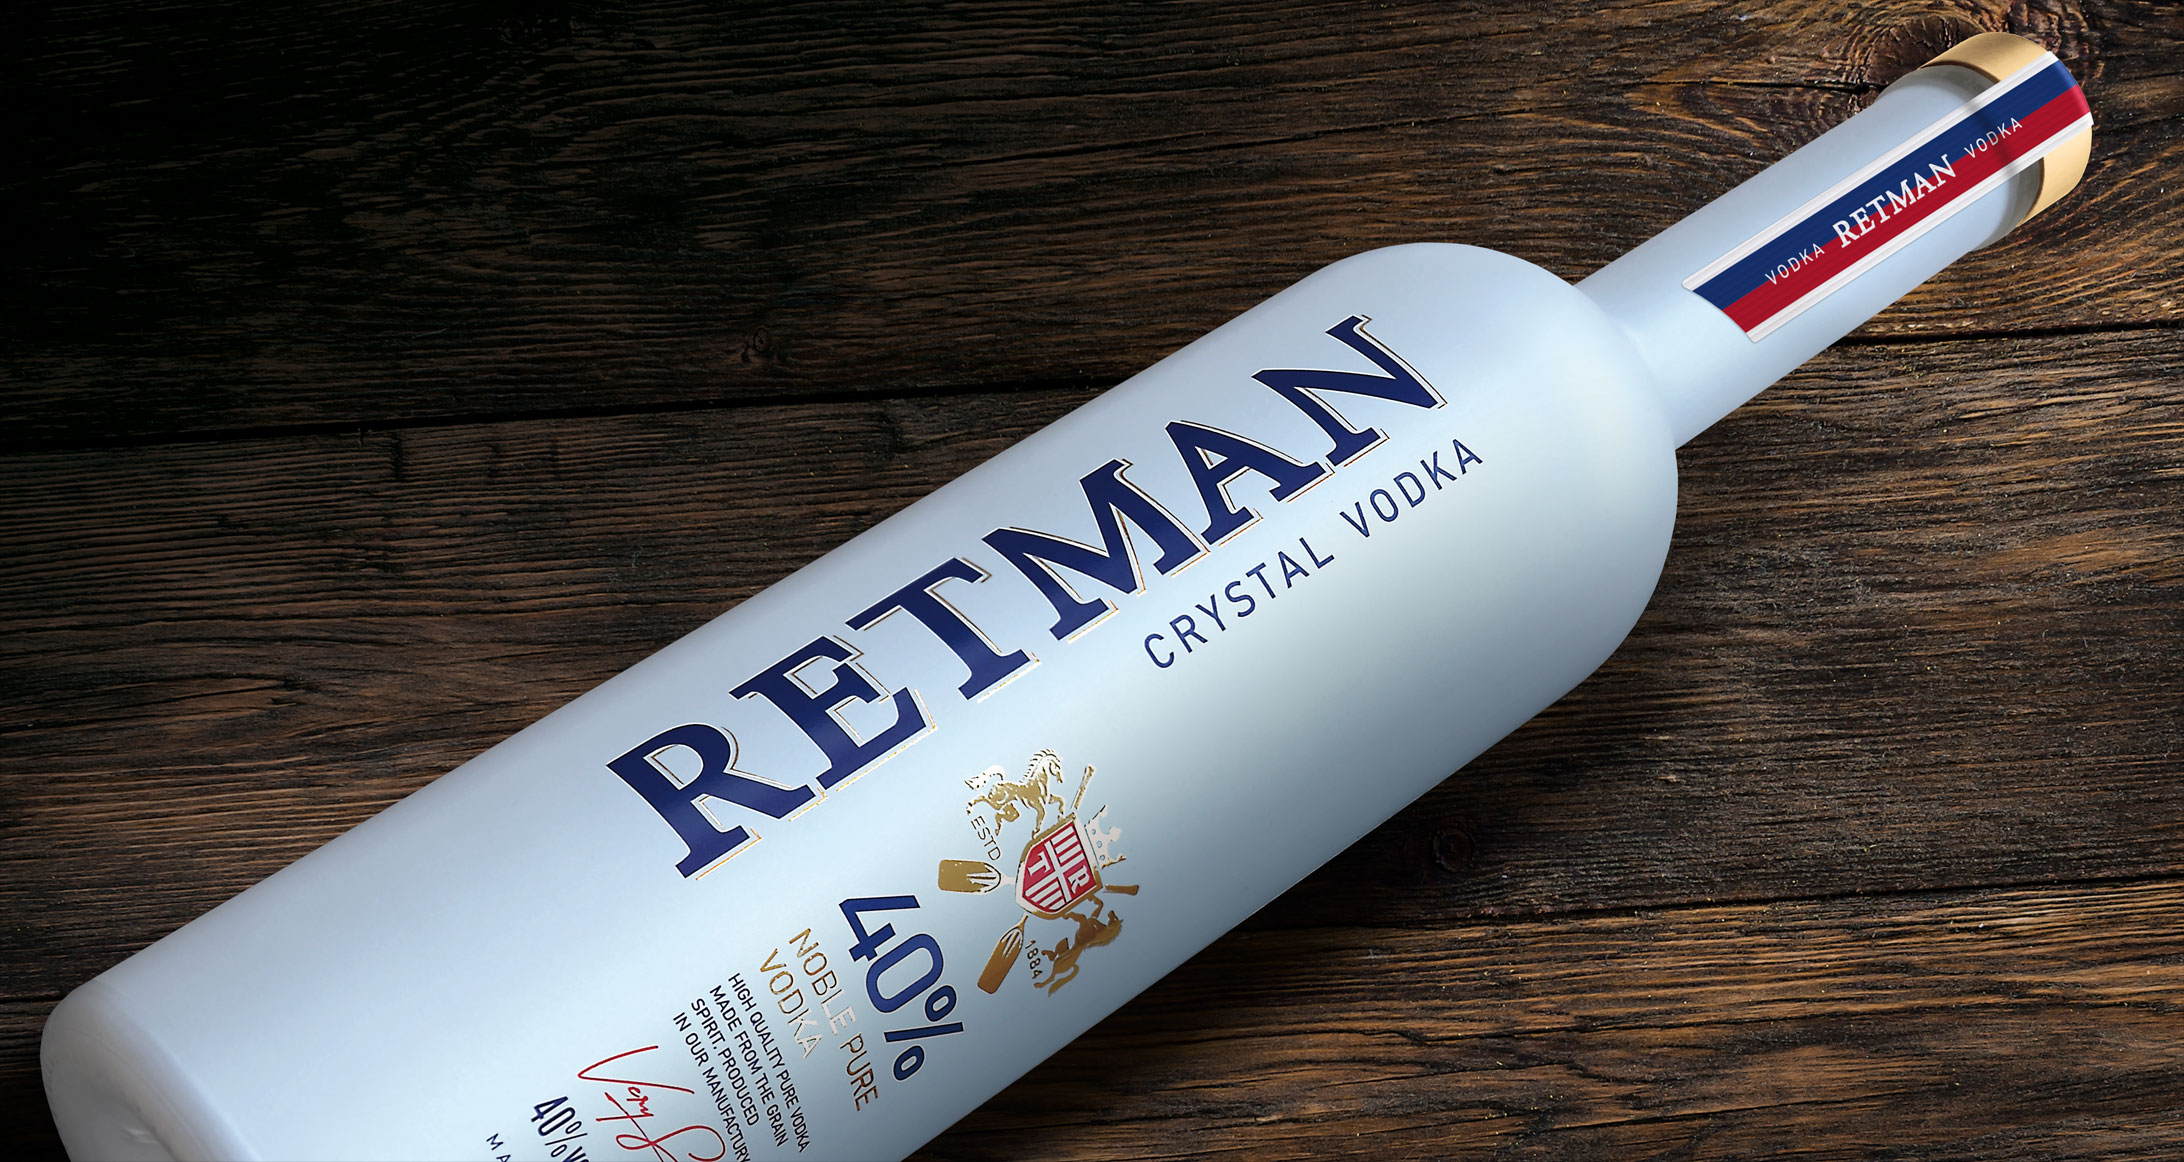 retman vodka new packaging design